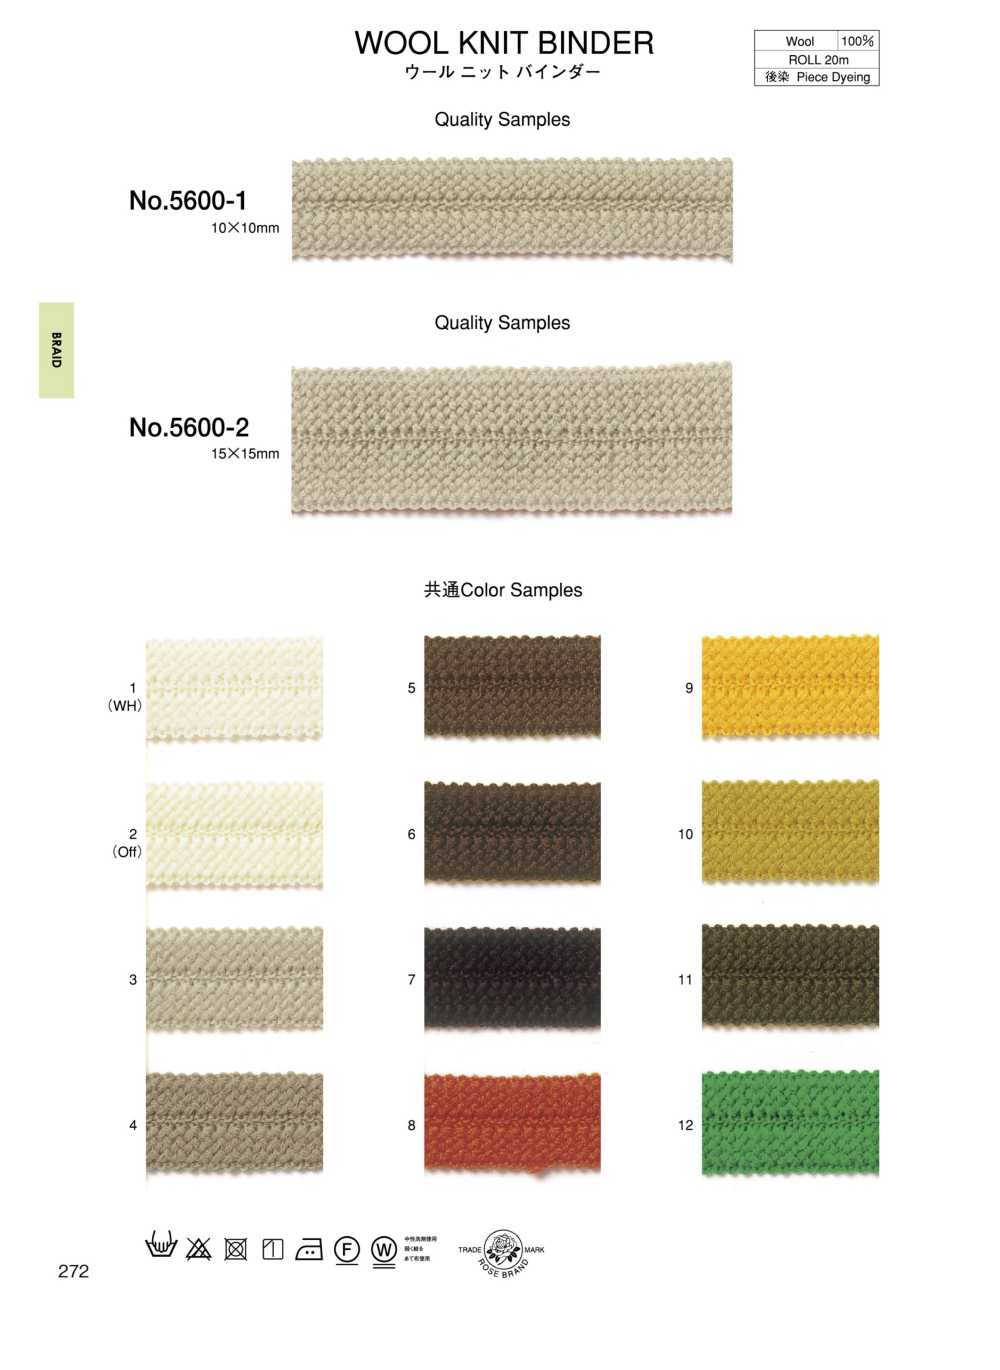 5600-2 Wool Knit Binder[Ribbon Tape Cord] ROSE BRAND (Marushin)